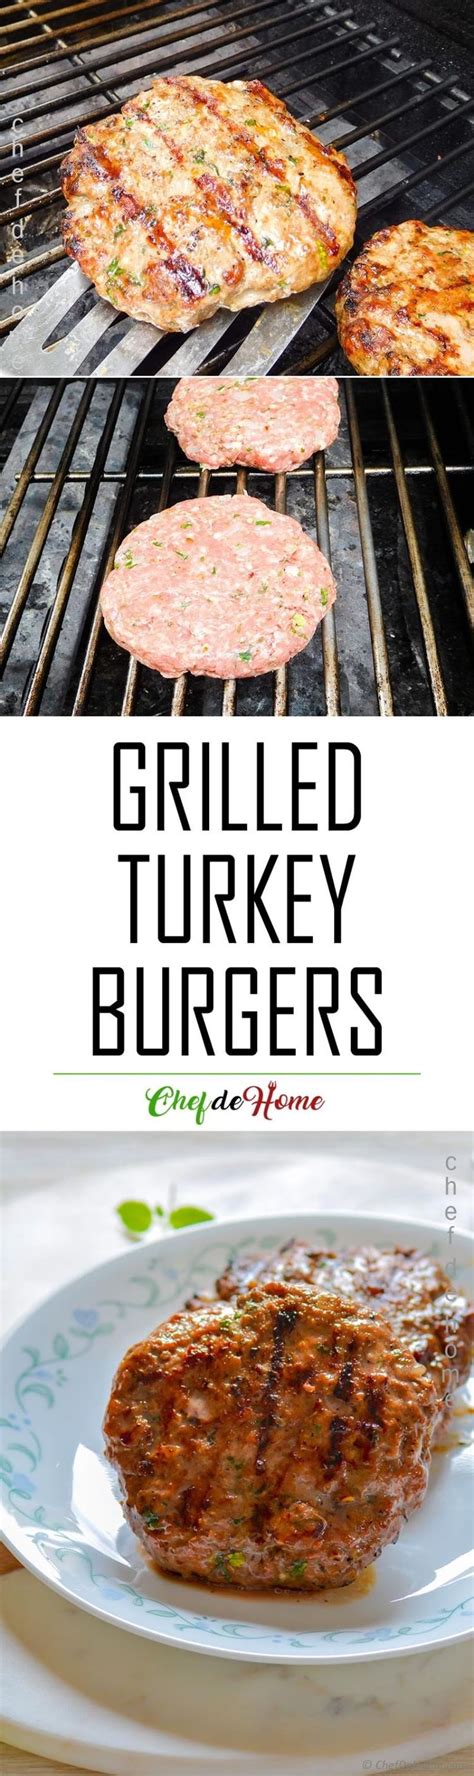 How To Make Grilled Turkey Burgers Grilled Turkey Burgers Turkey